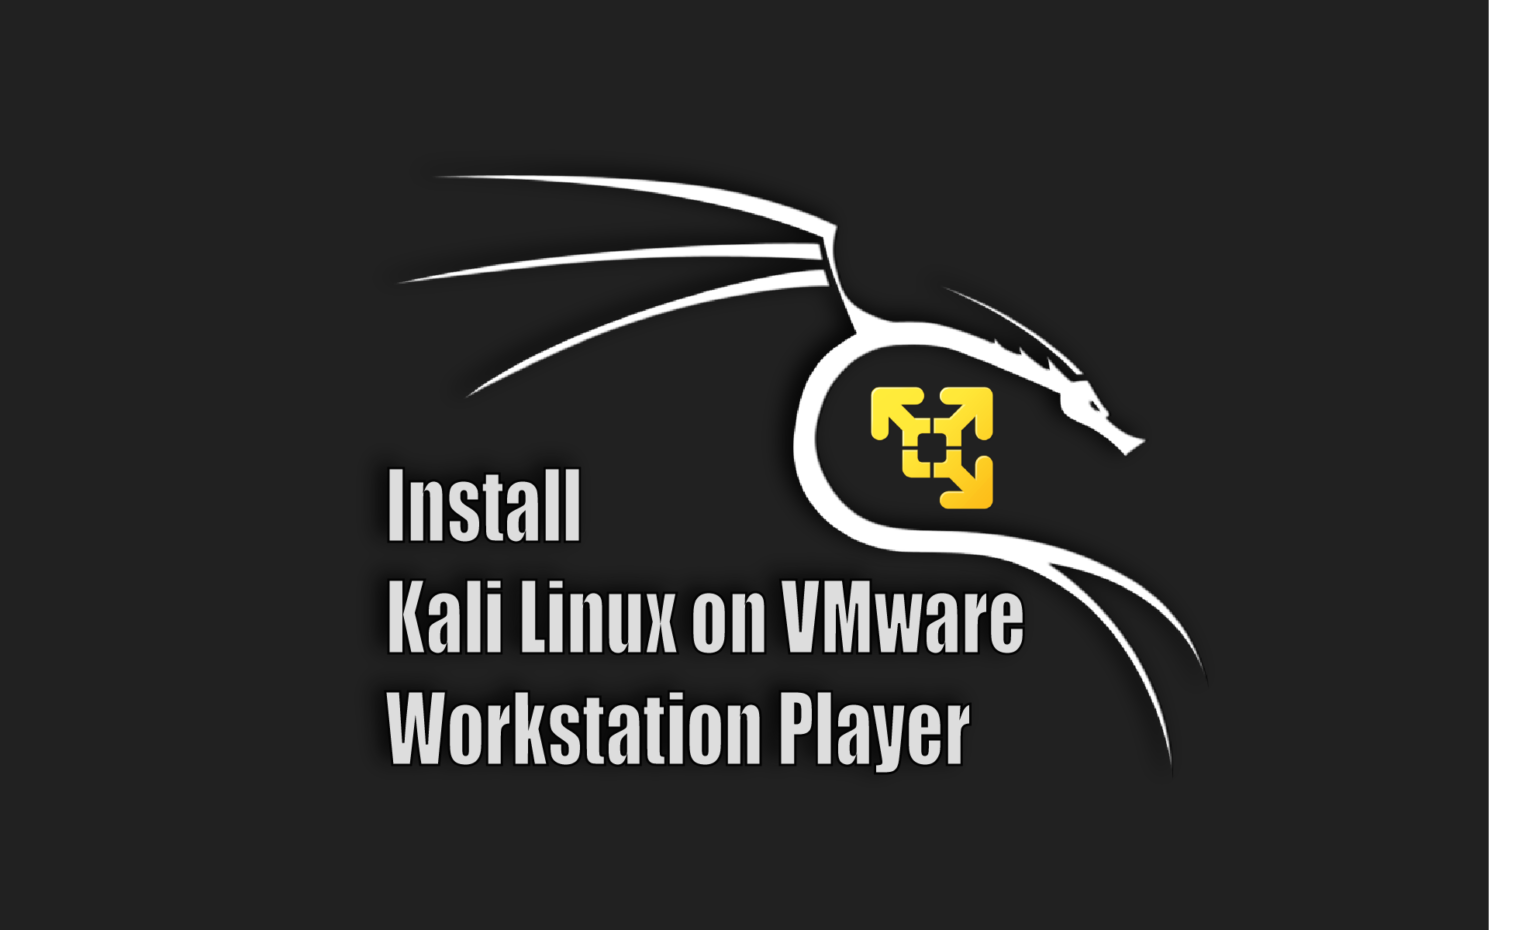 kali linux image for vmware